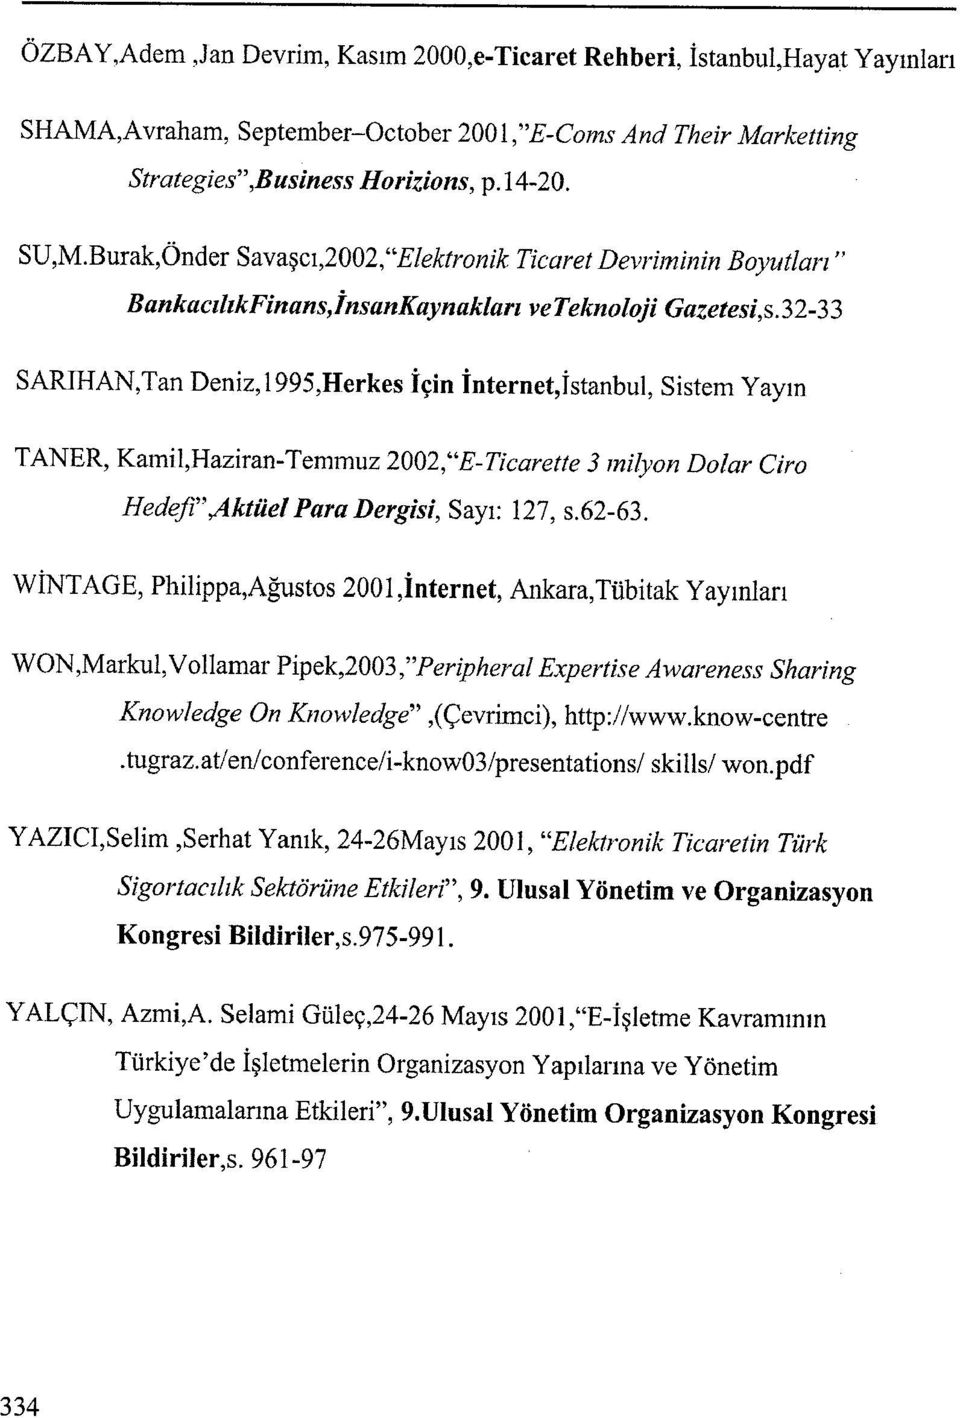 32-33 TANER, Kamil,Haziran-Temmuz 2002,"E-Ticarette 3 milyon Dolar Ciro Hedefi",Aktüel Para Dergisi, Sayı: 127, s.62-63.